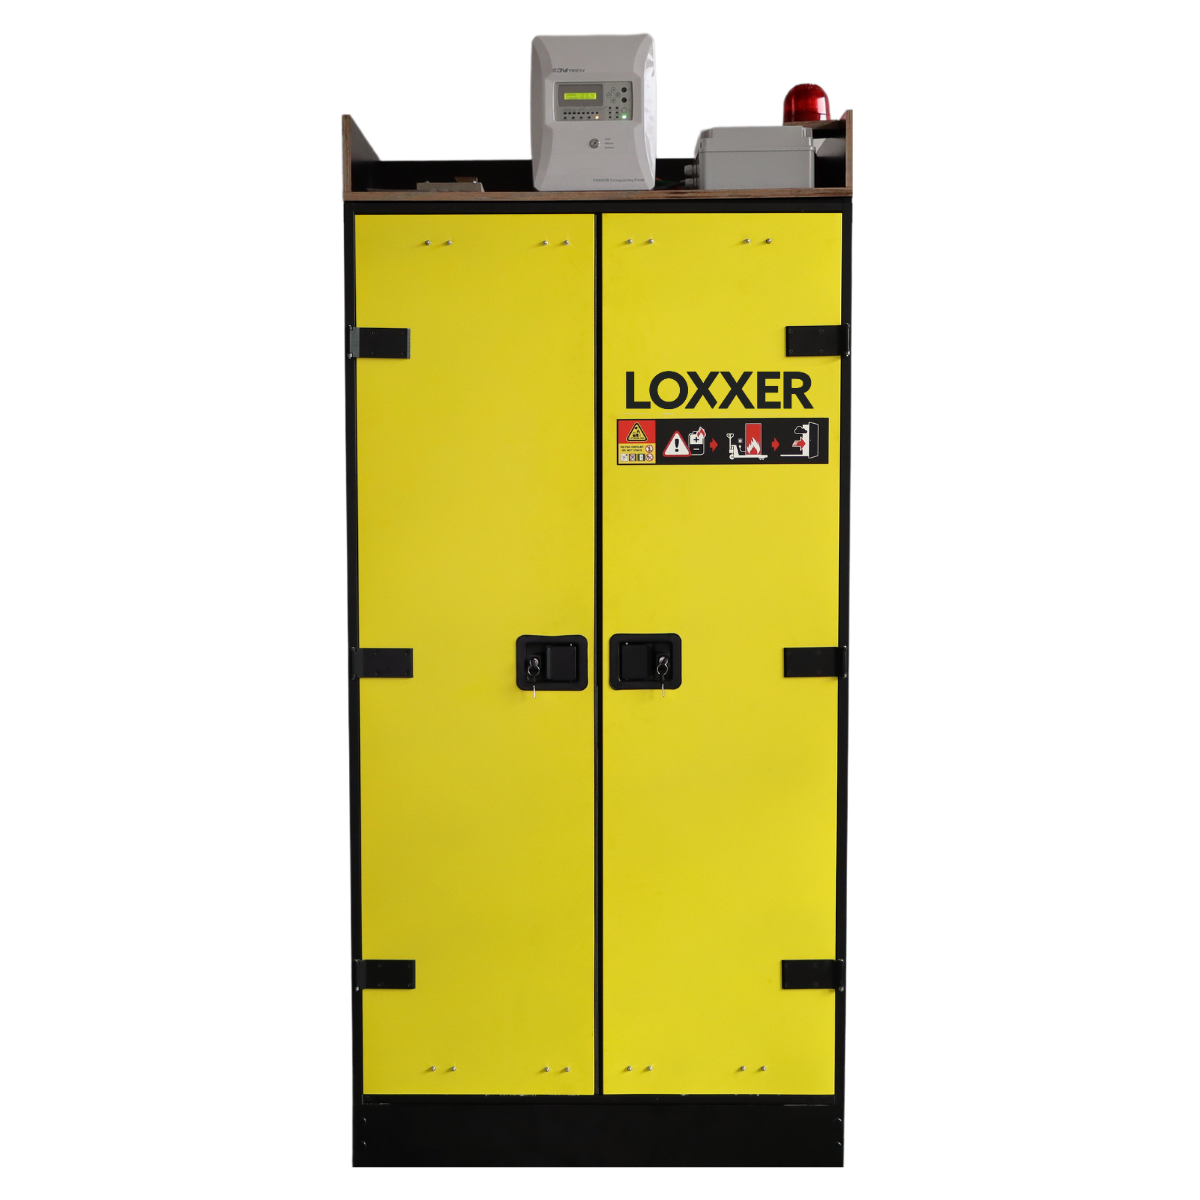 LOXXER Lithium kasten